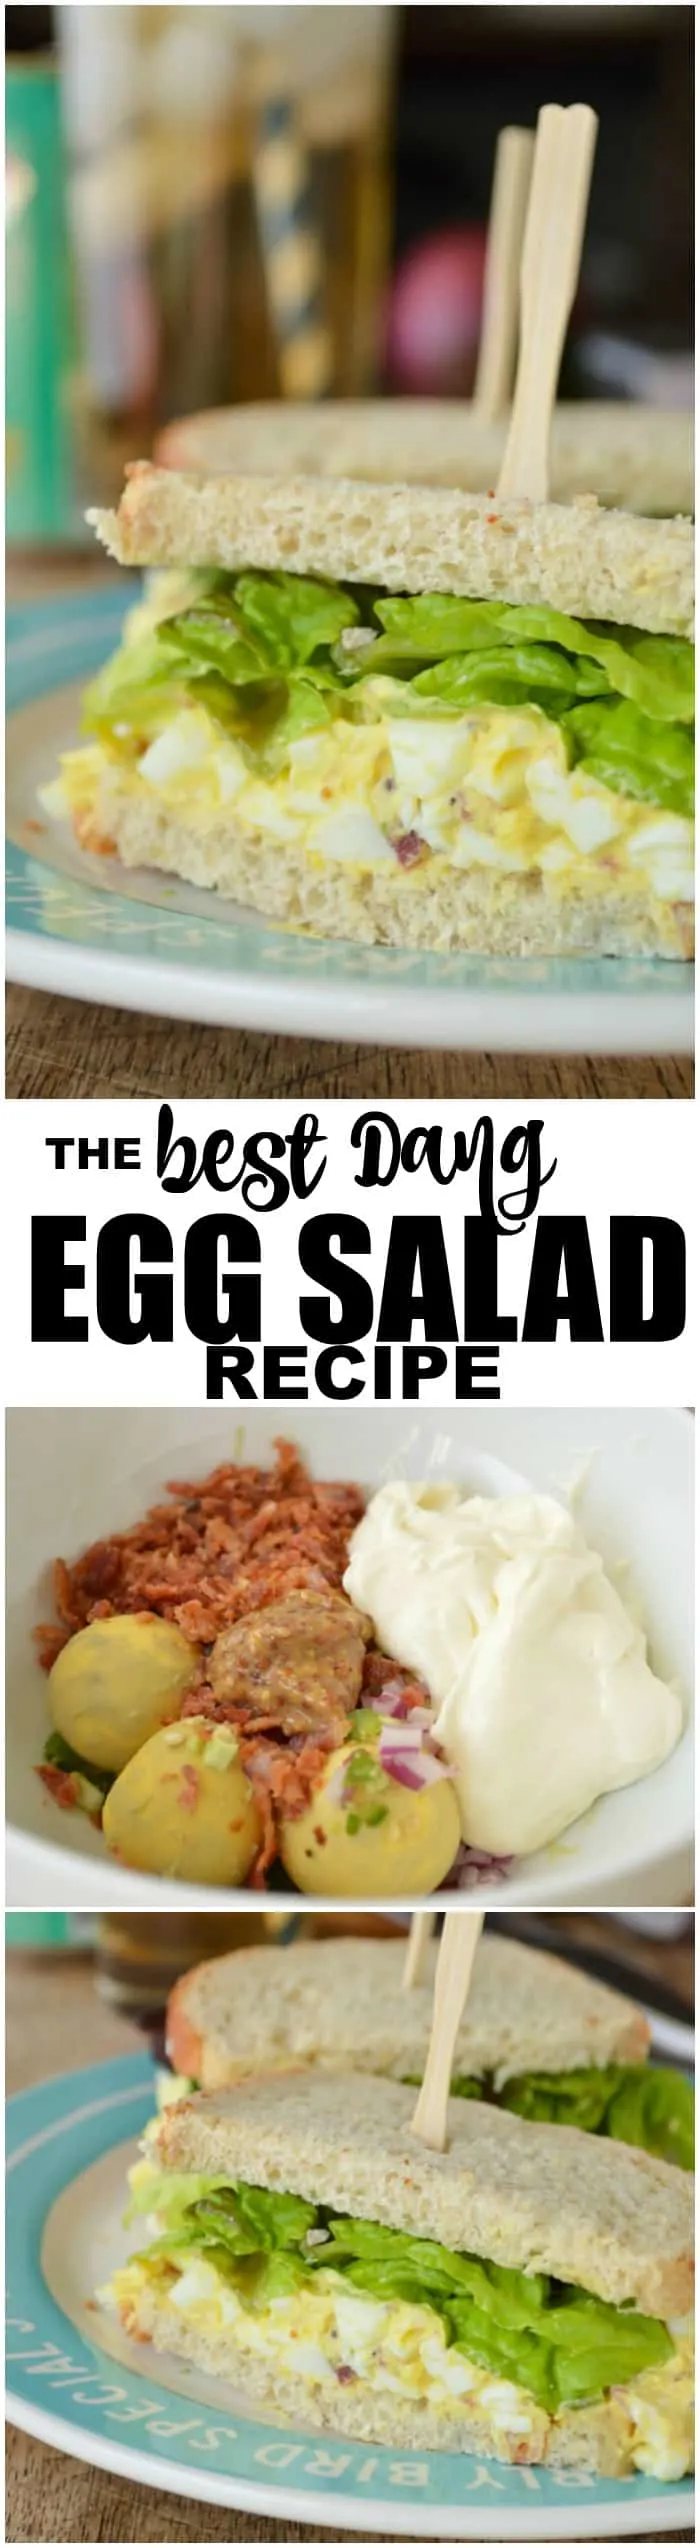 The Best Dang Egg Salad Recipe Ever